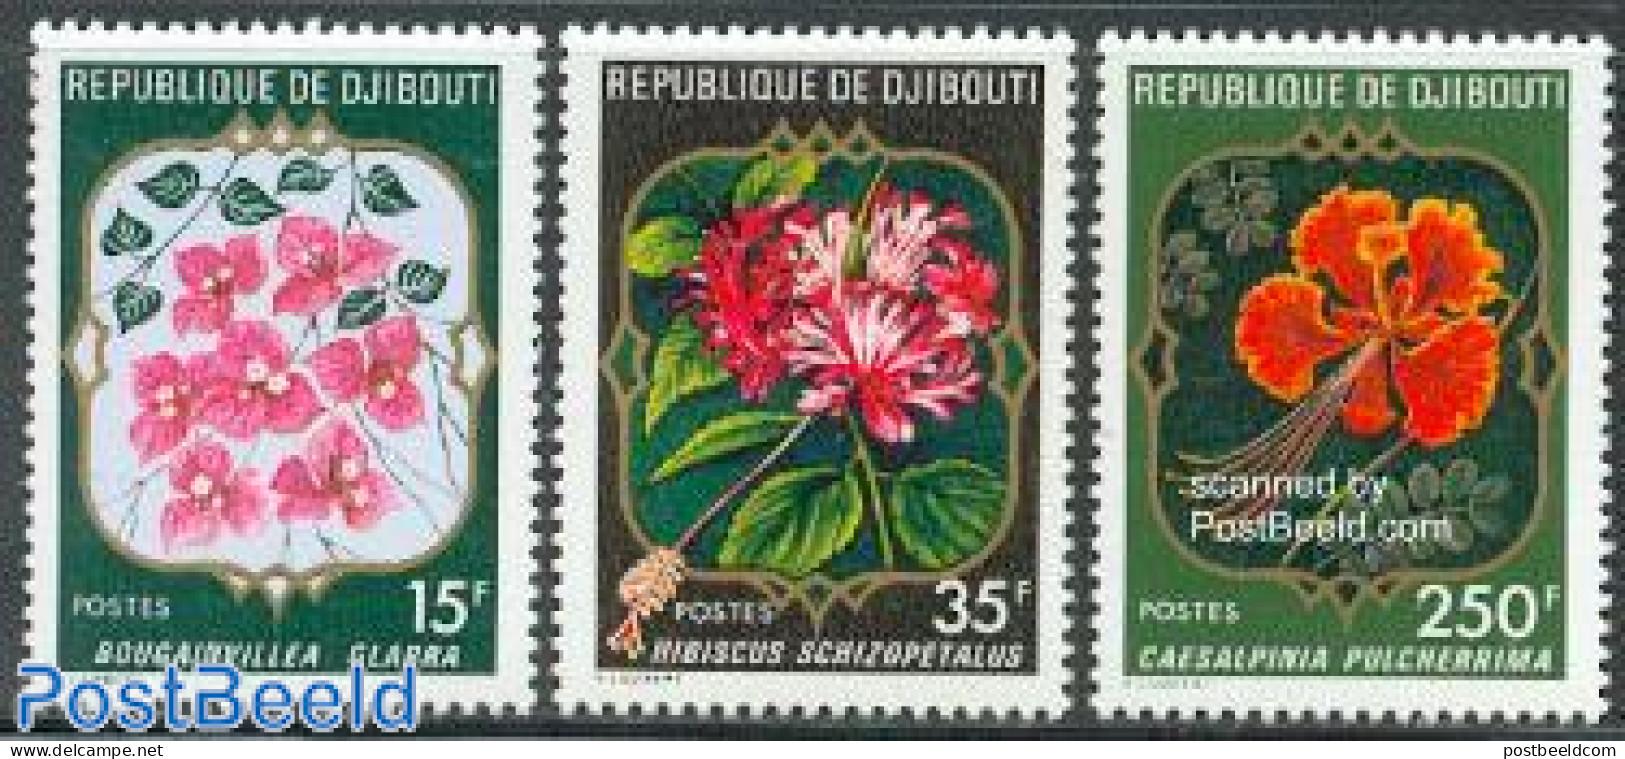 Djibouti 1978 Flowers 3v, Mint NH, Nature - Flowers & Plants - Dschibuti (1977-...)